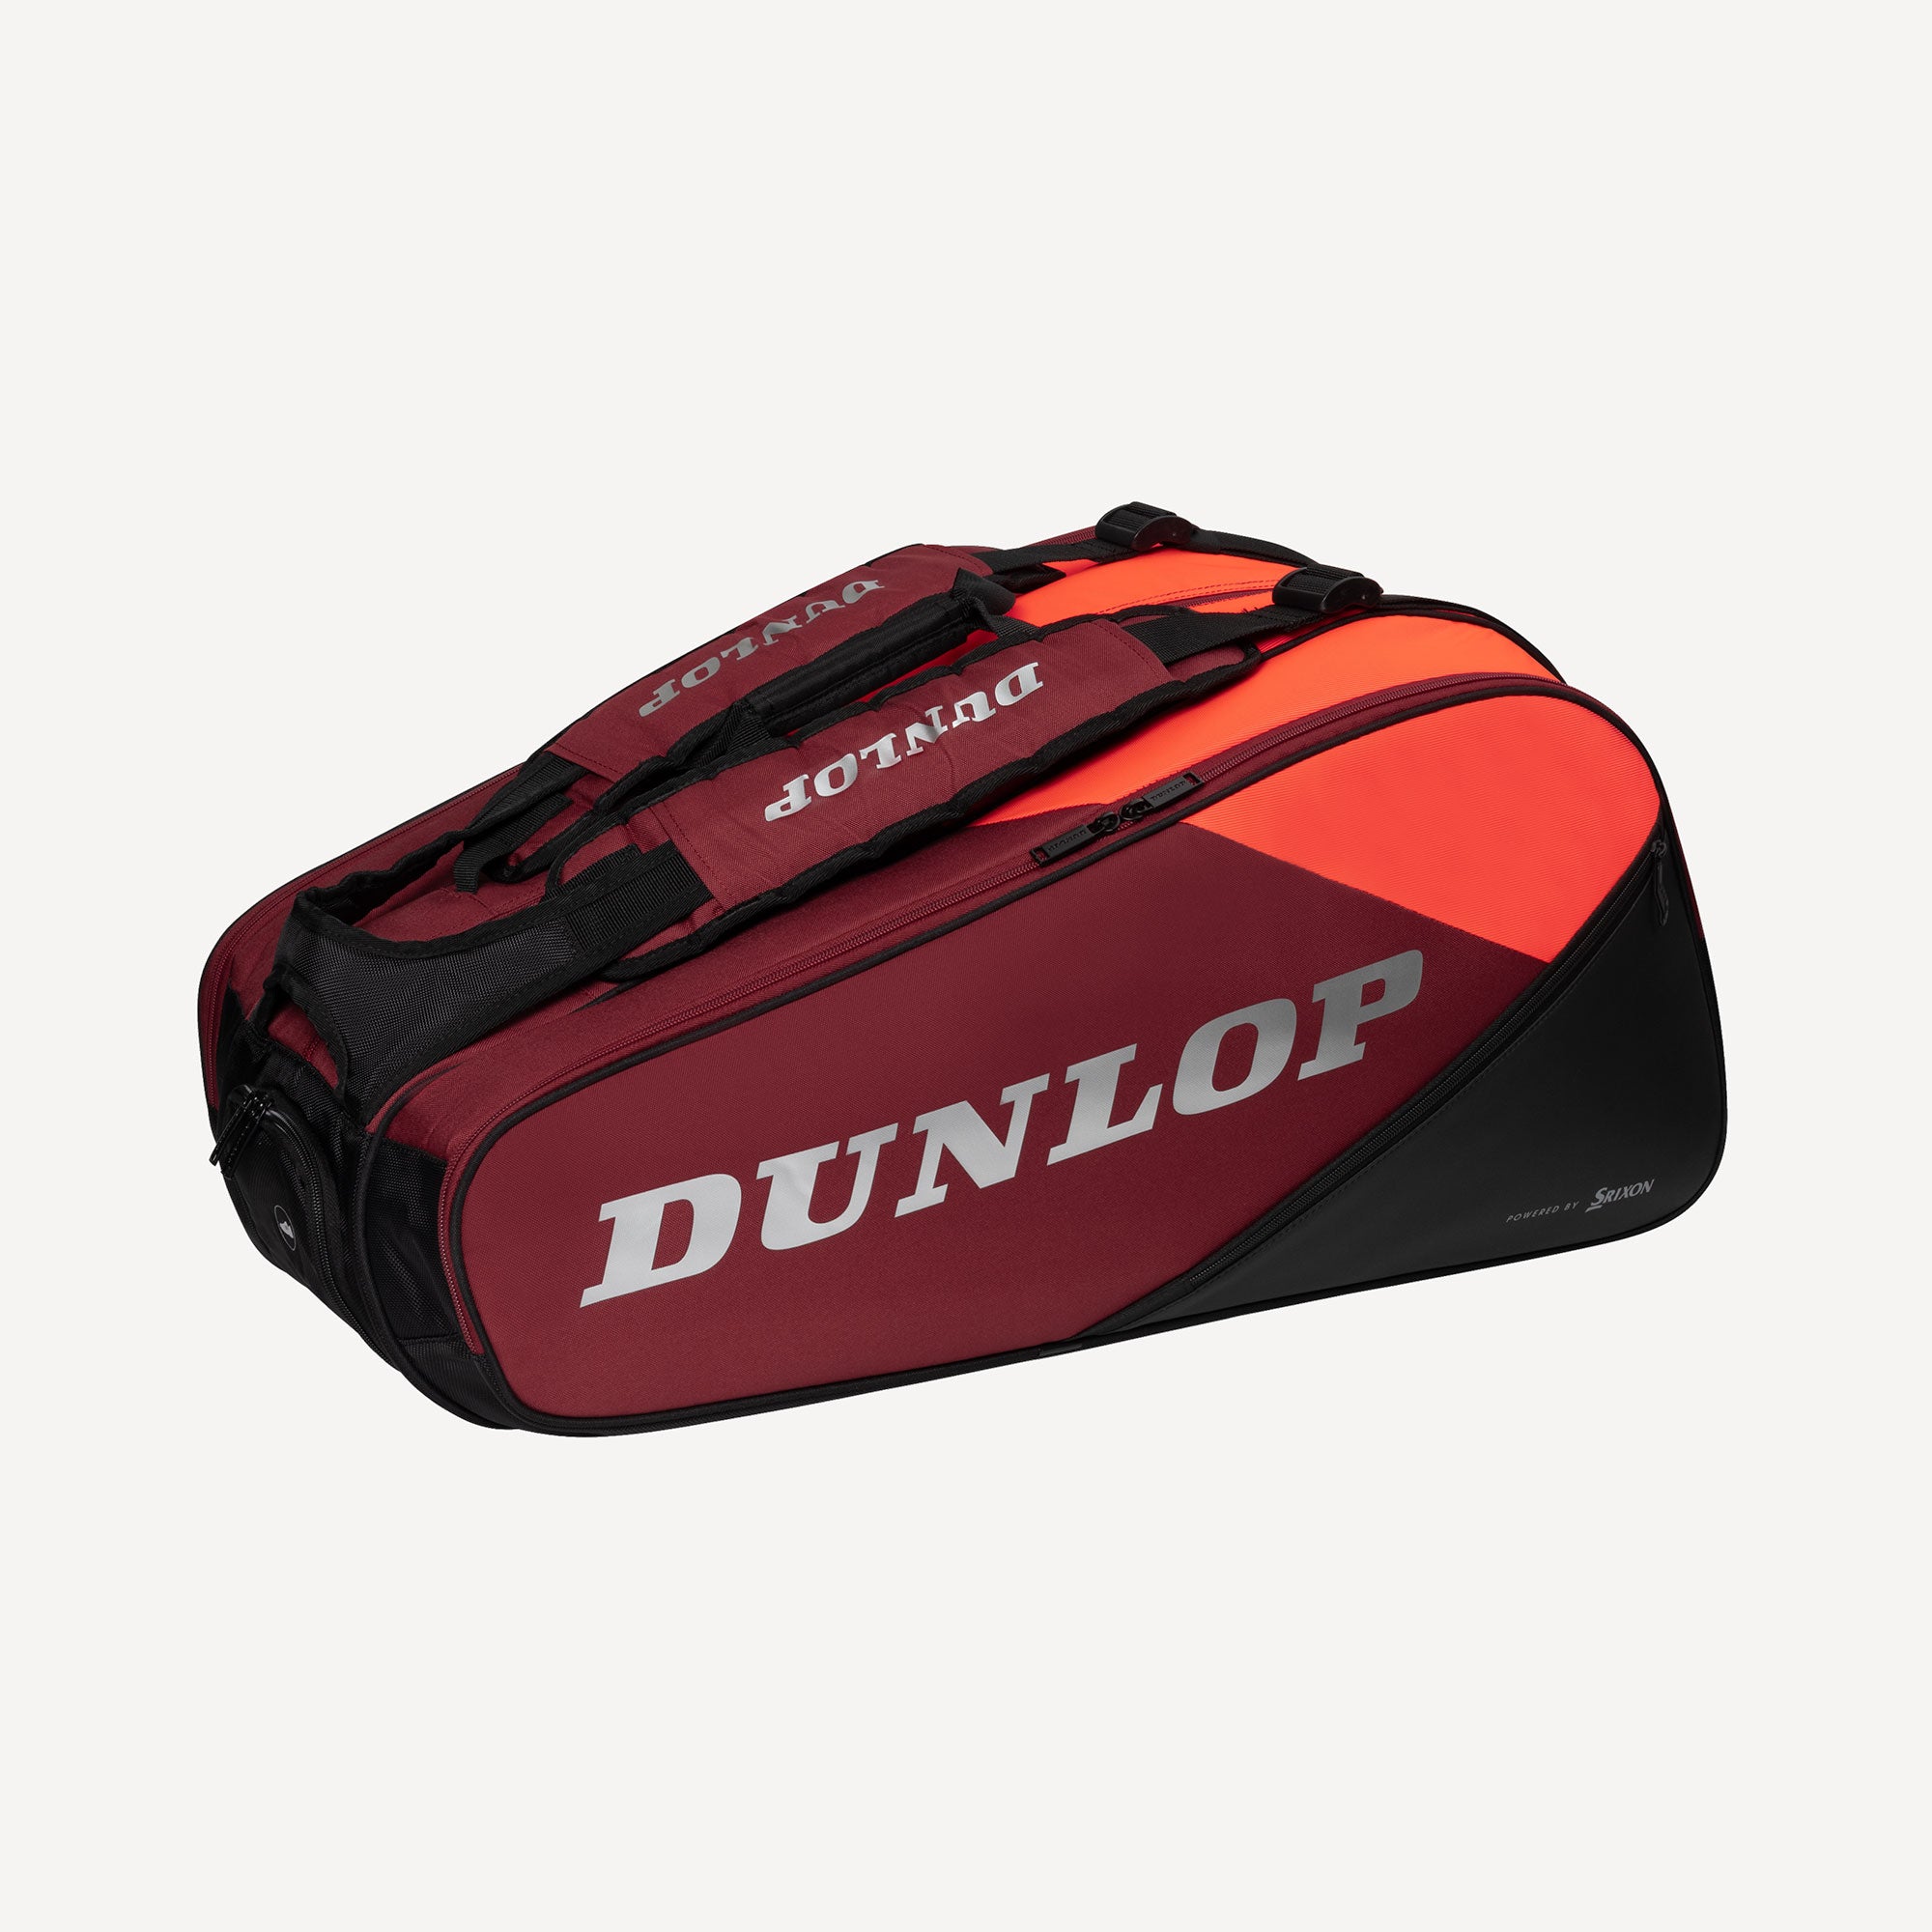 Dunlop CX Performance 12 Racket Tennis Bag - Red (2)